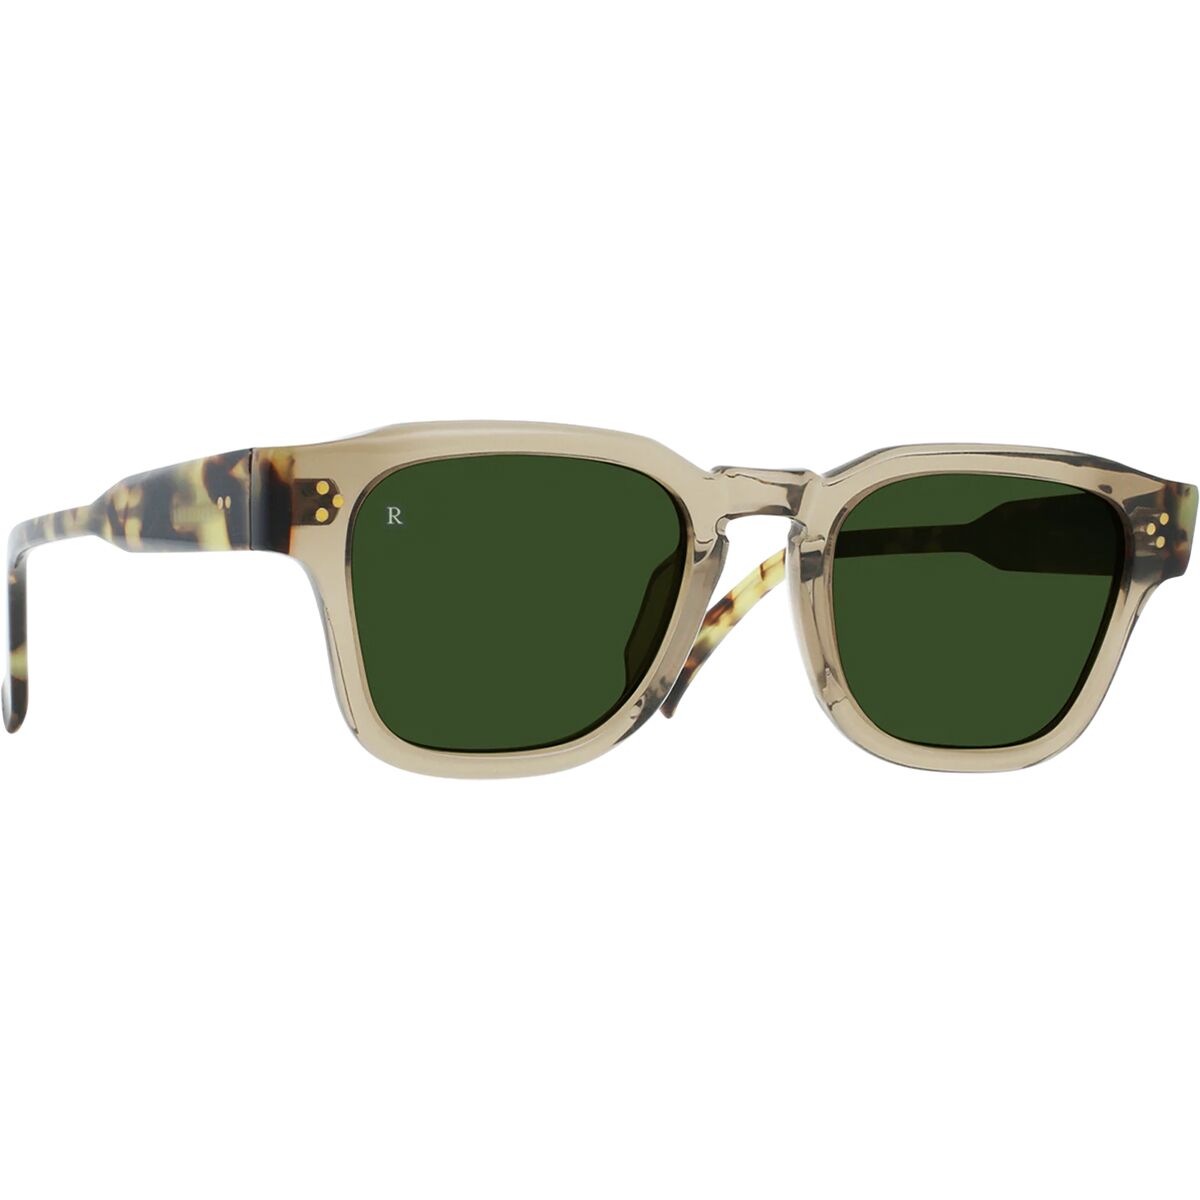 RAEN optics Rece 51 Polarized Sunglasses